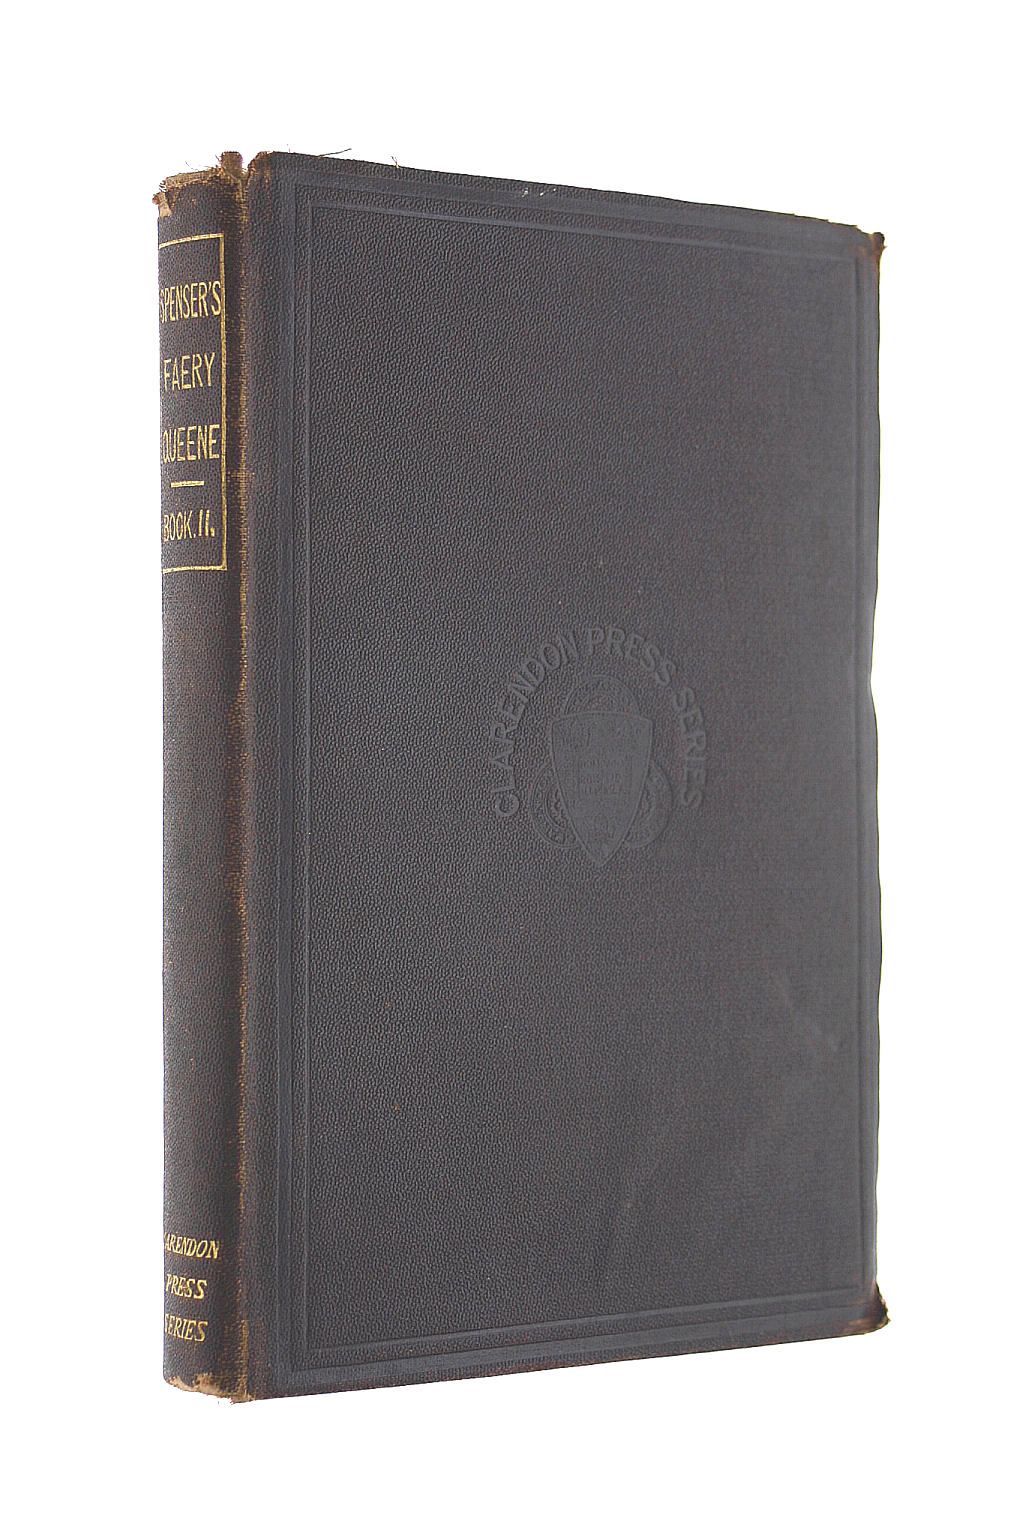 SPENSER; GW KITCHIN (ED) - The Faery Queene Book II. Clarendon Press Series